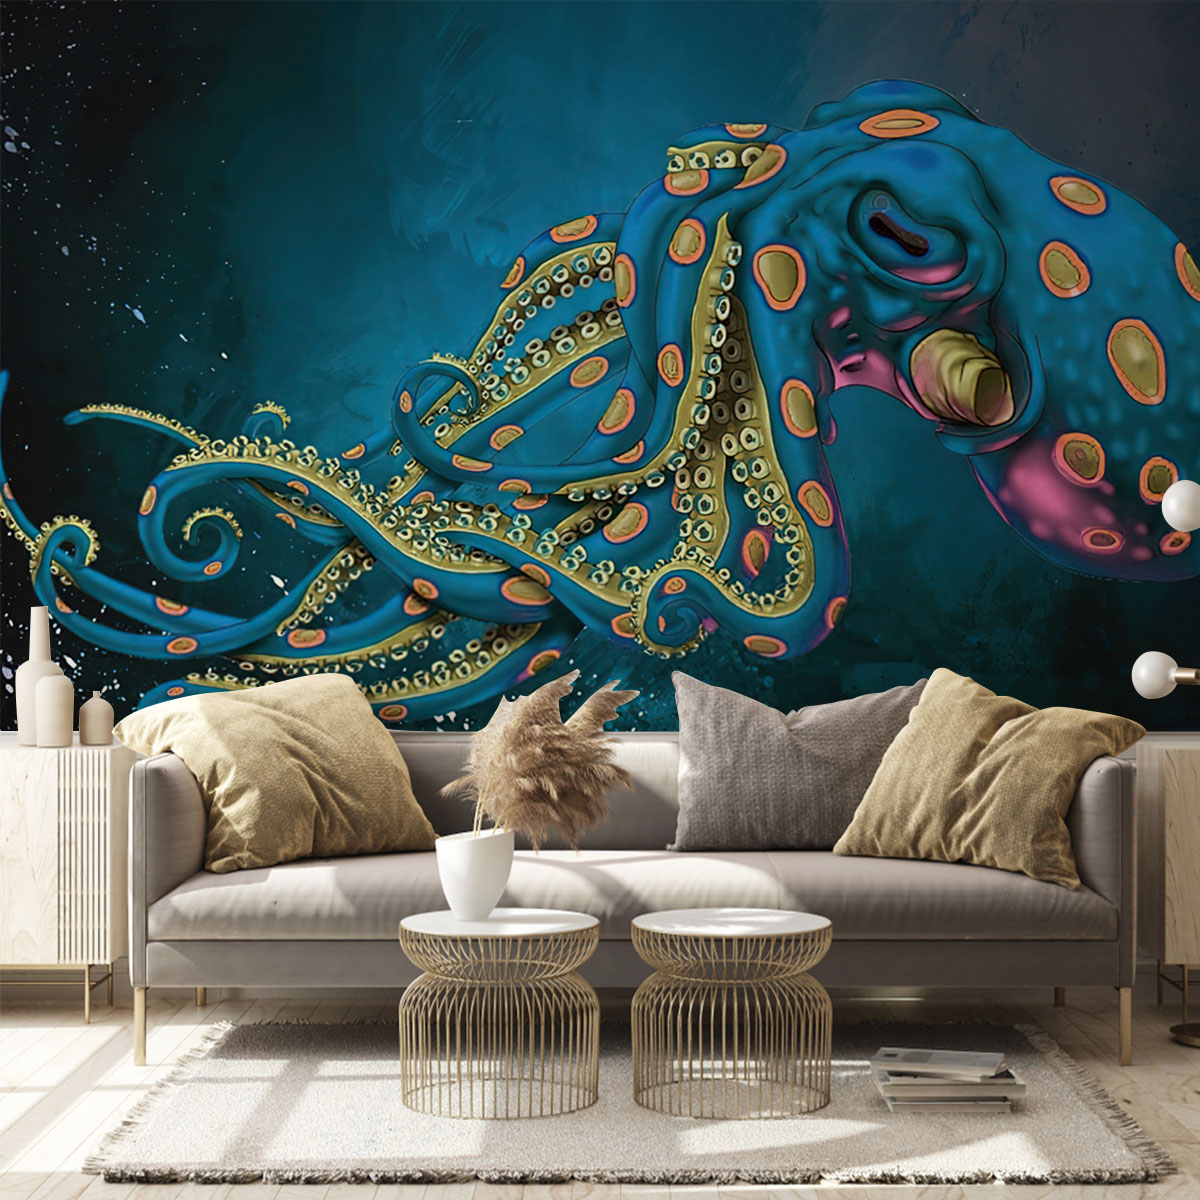 Water Octopus Wall Mural_1_2.1